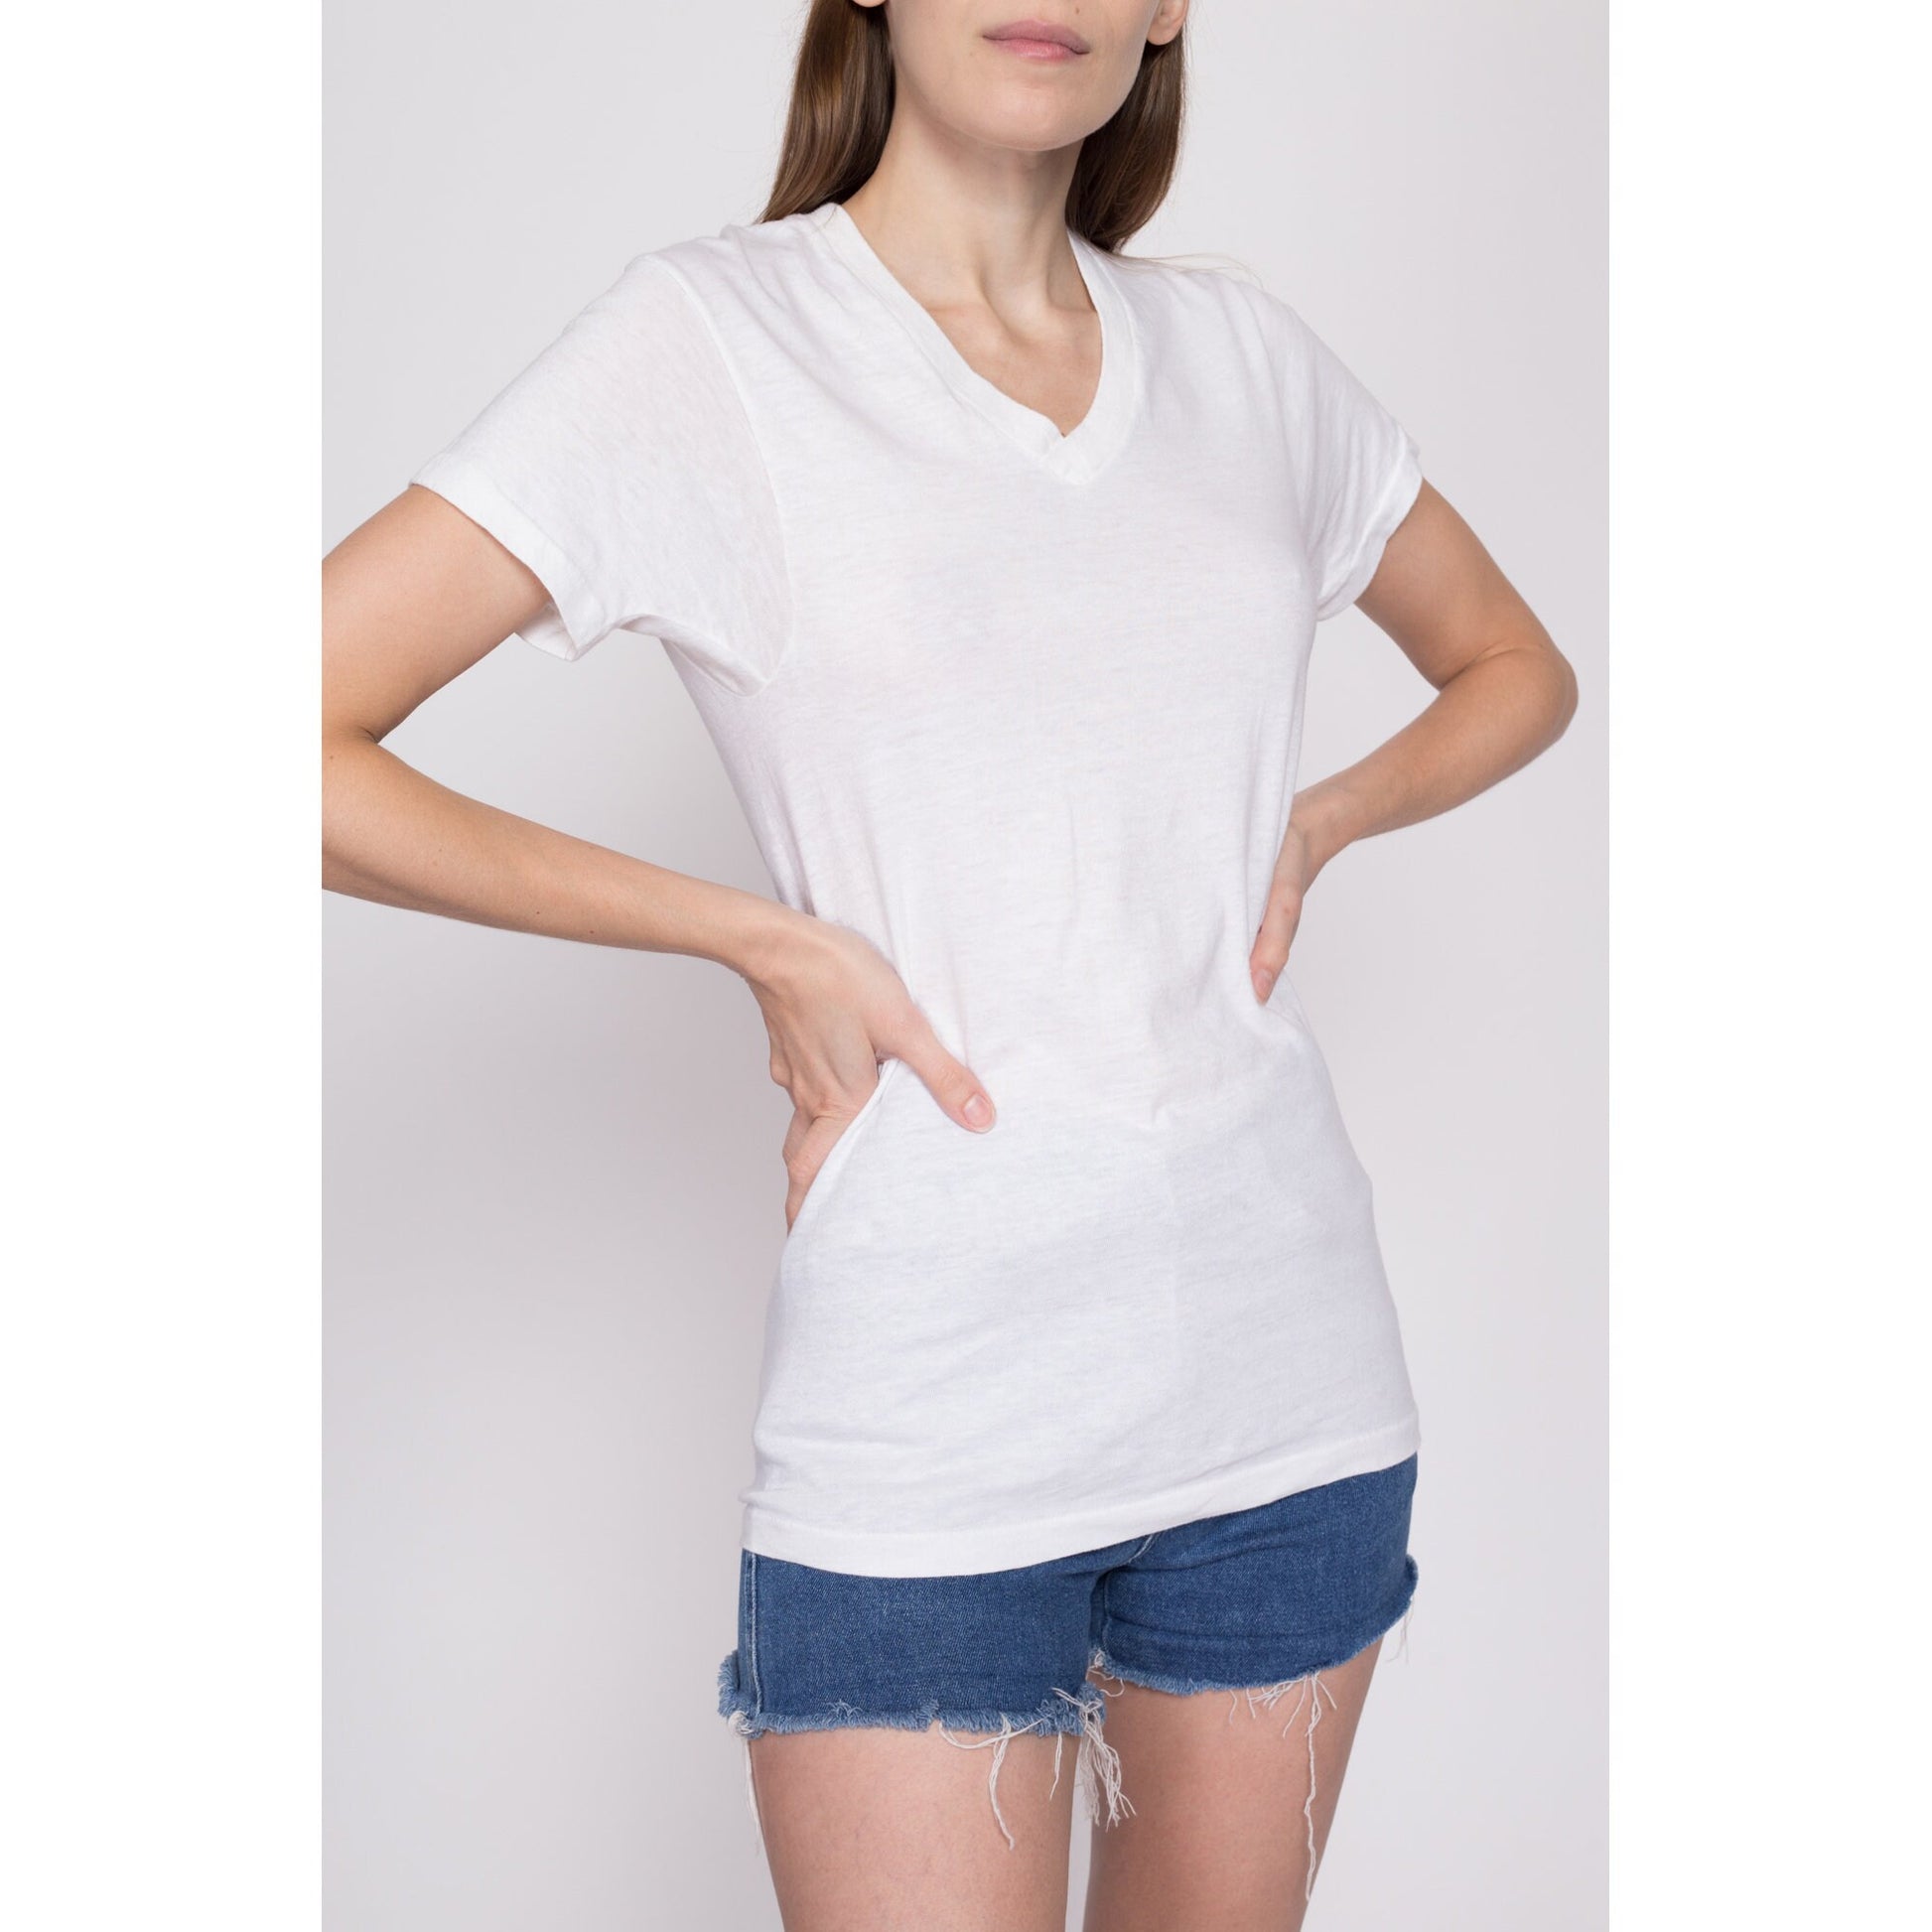 Small 80s Calvin Klein Blank White T Shirt Unisex | Vintage Single Stitch Plain V Neck Tee Threadbare Undershirt